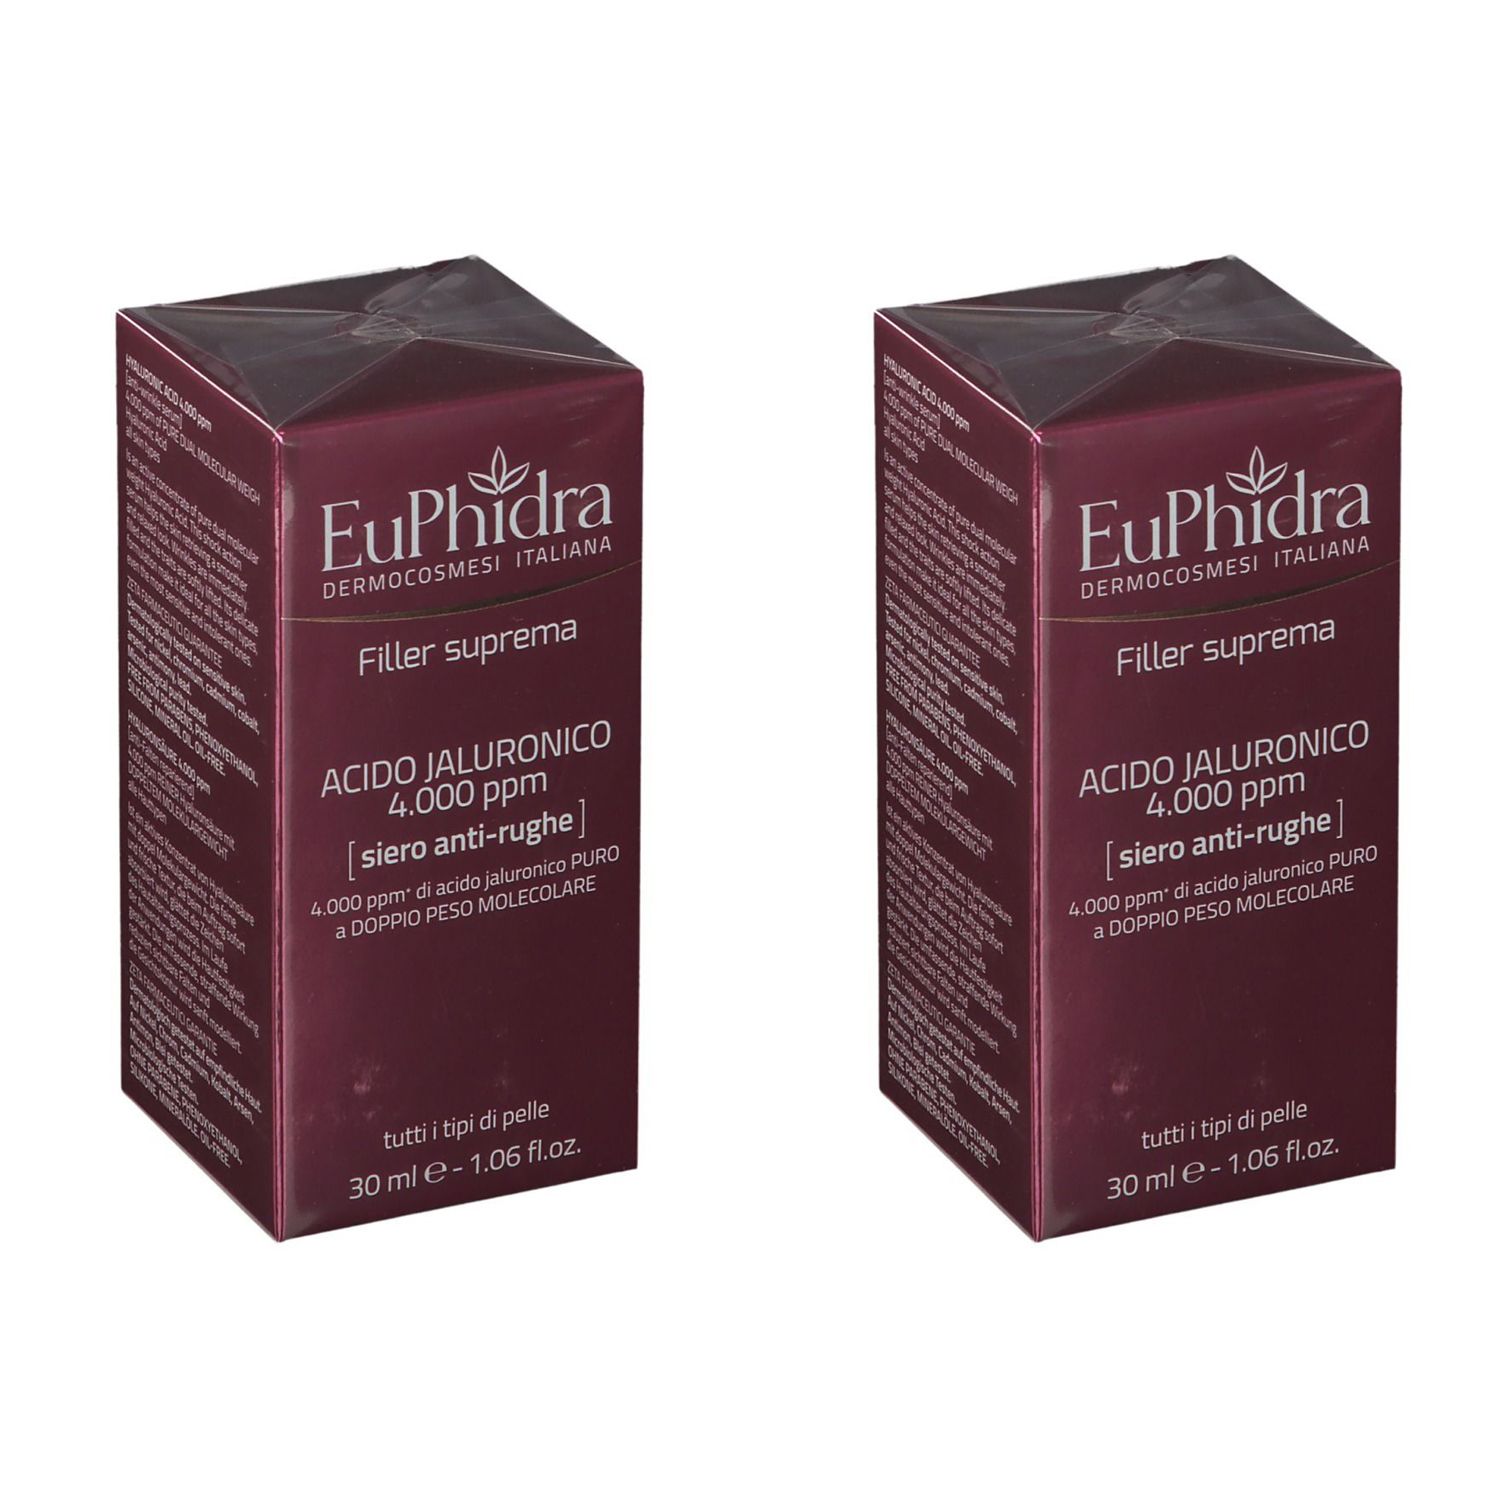 EuPhidra Filler Suprema Acido Jaluronico 4.000 ppm